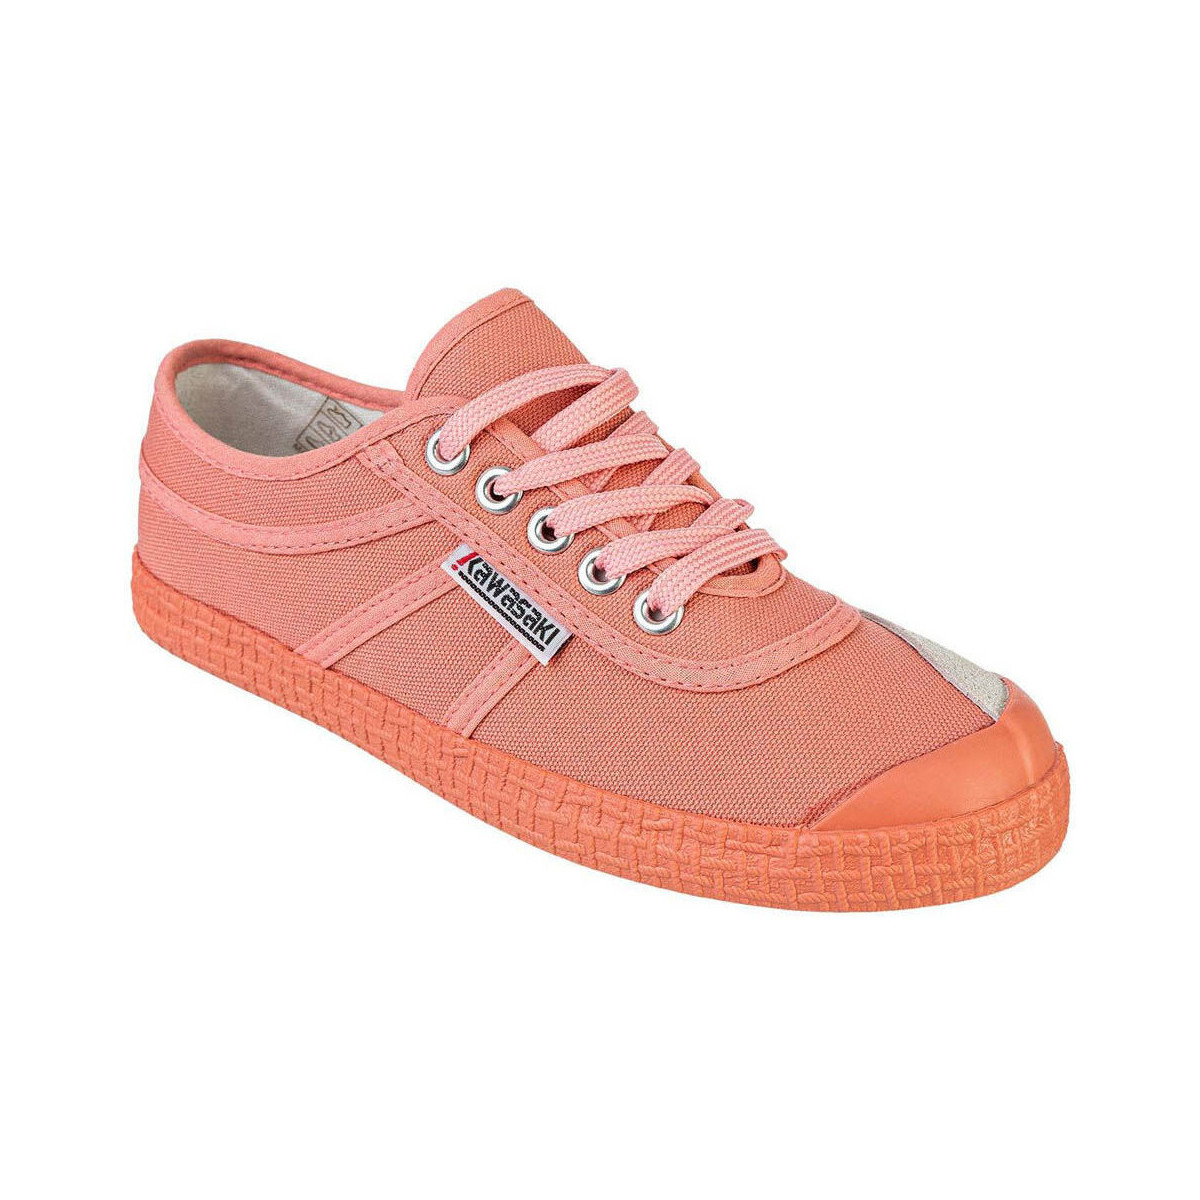 Čevlji  Ženske Modne superge Kawasaki Color Block Shoe K202430 4144 Shell Pink Rožnata